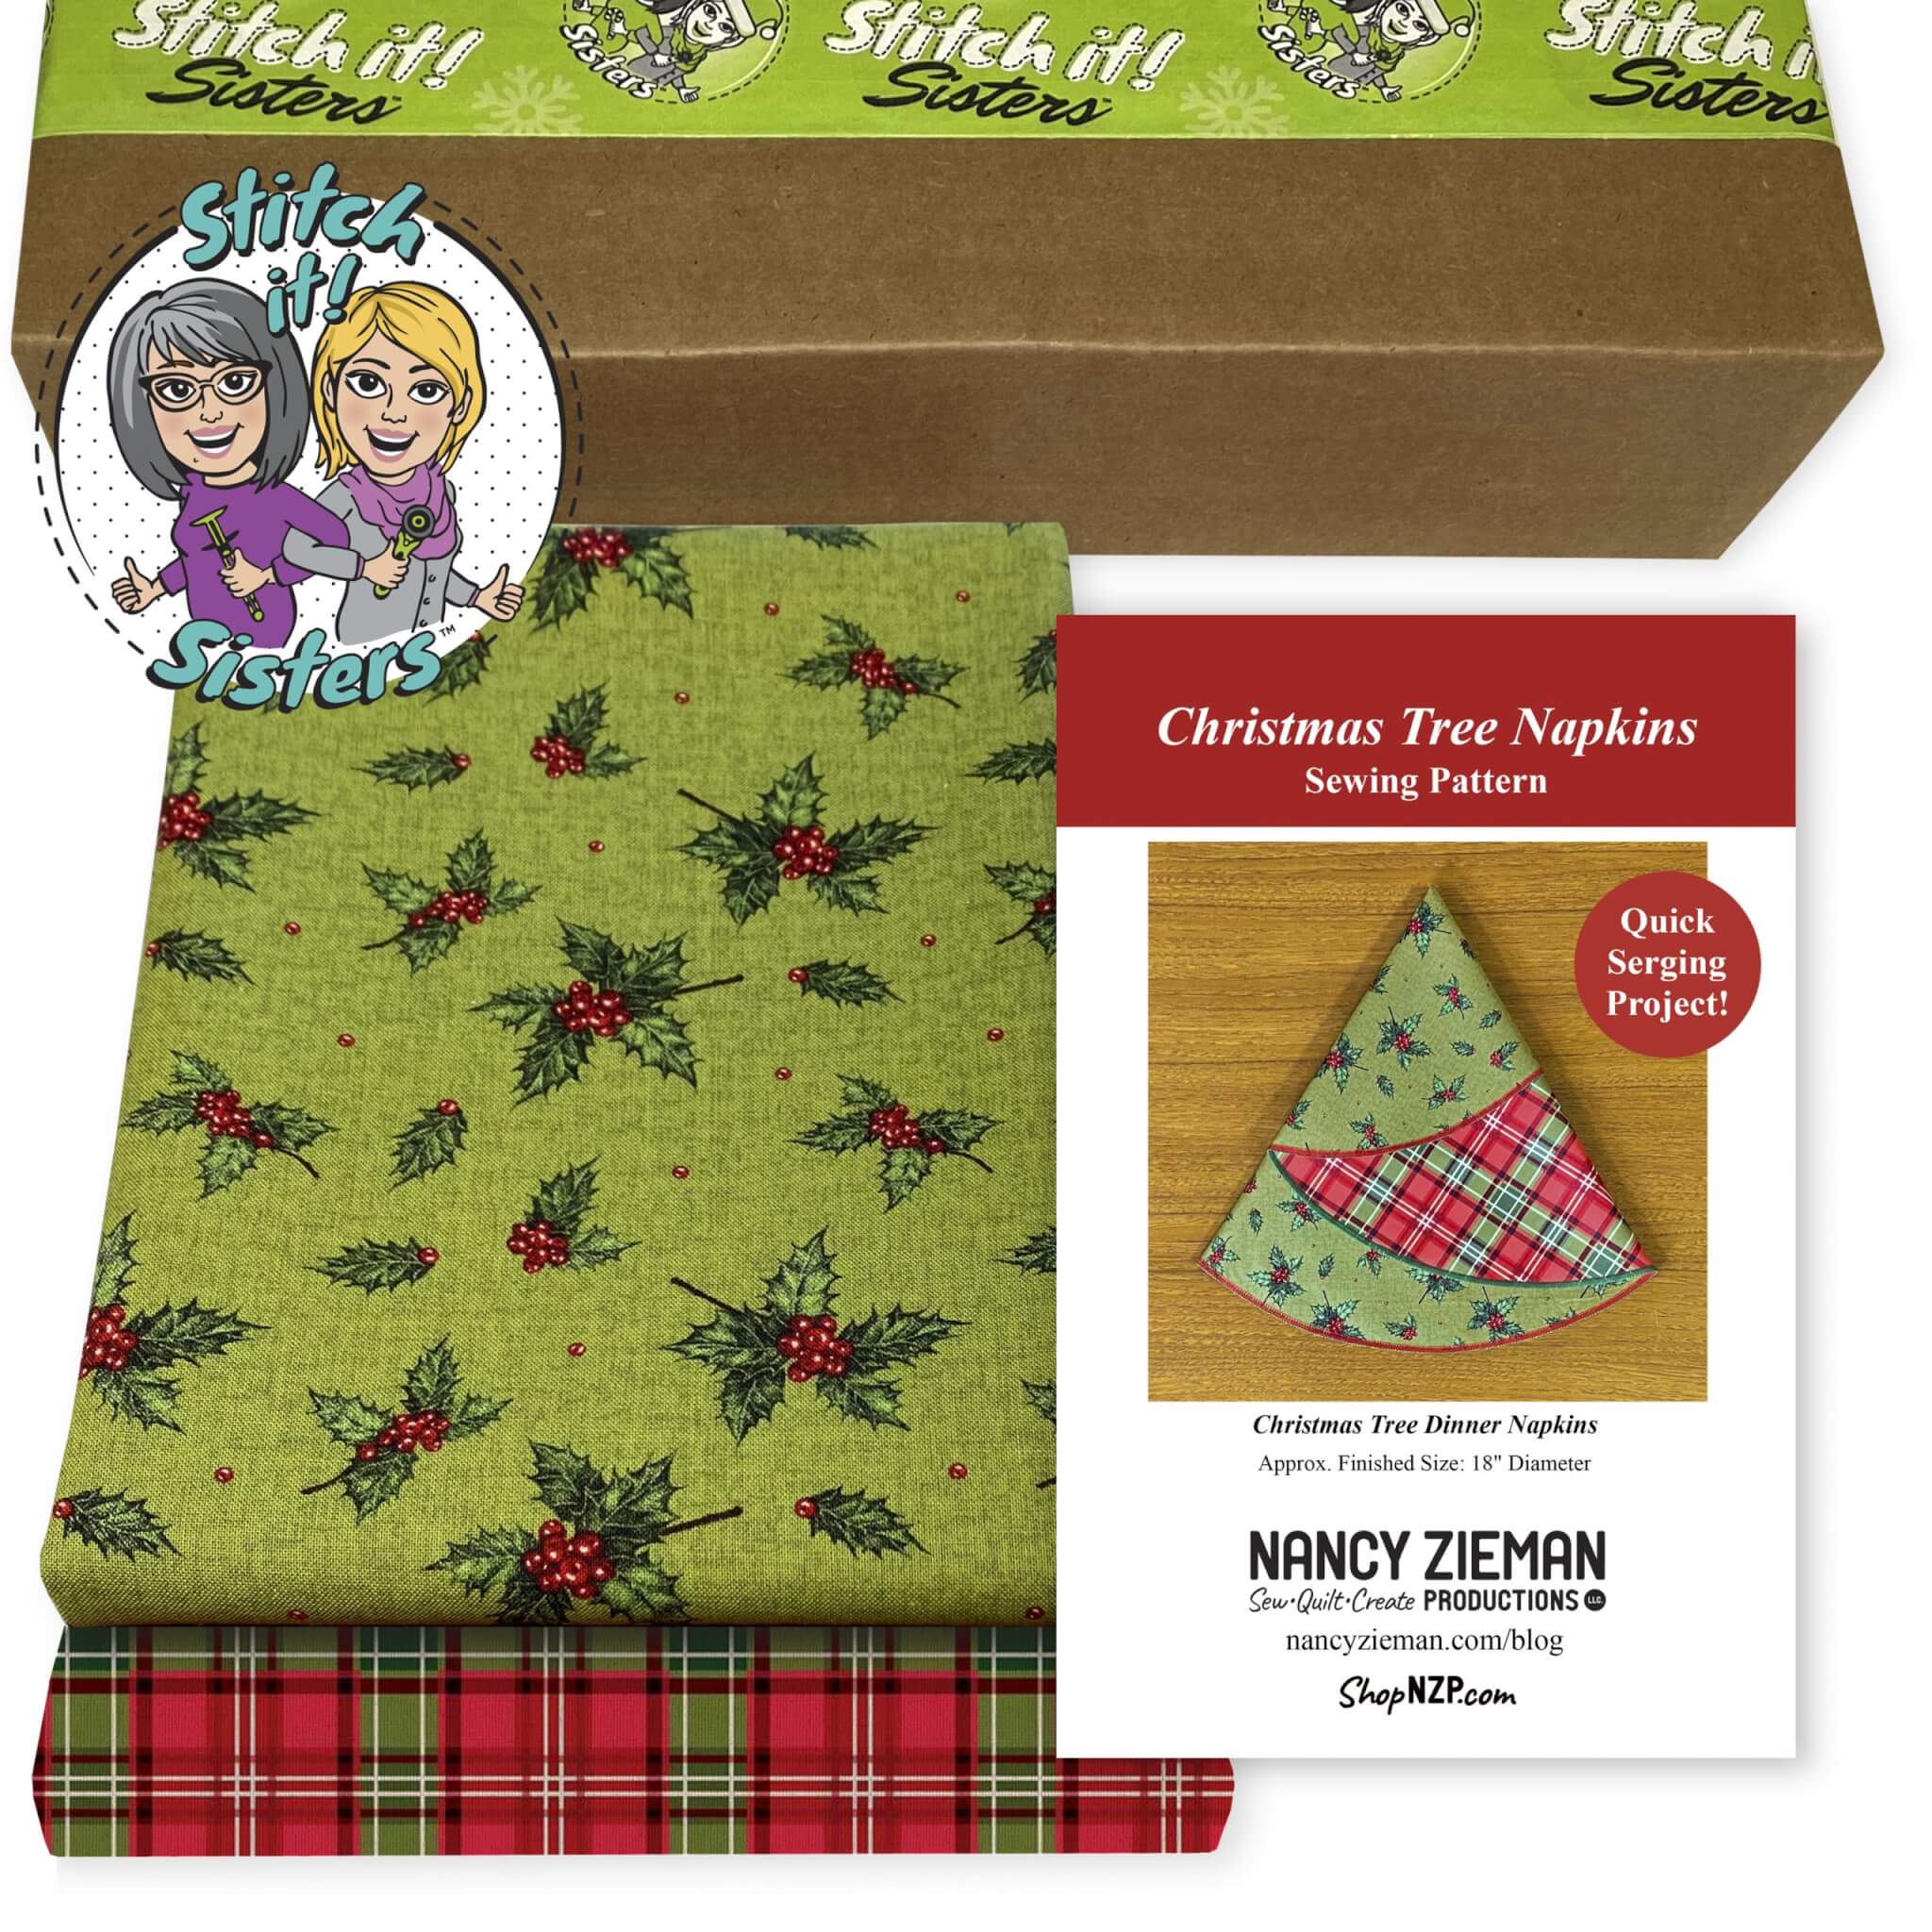 Christmas Tree Napkins Bundle Box Available at ShopNZP.com at Nancy Zieman Productions